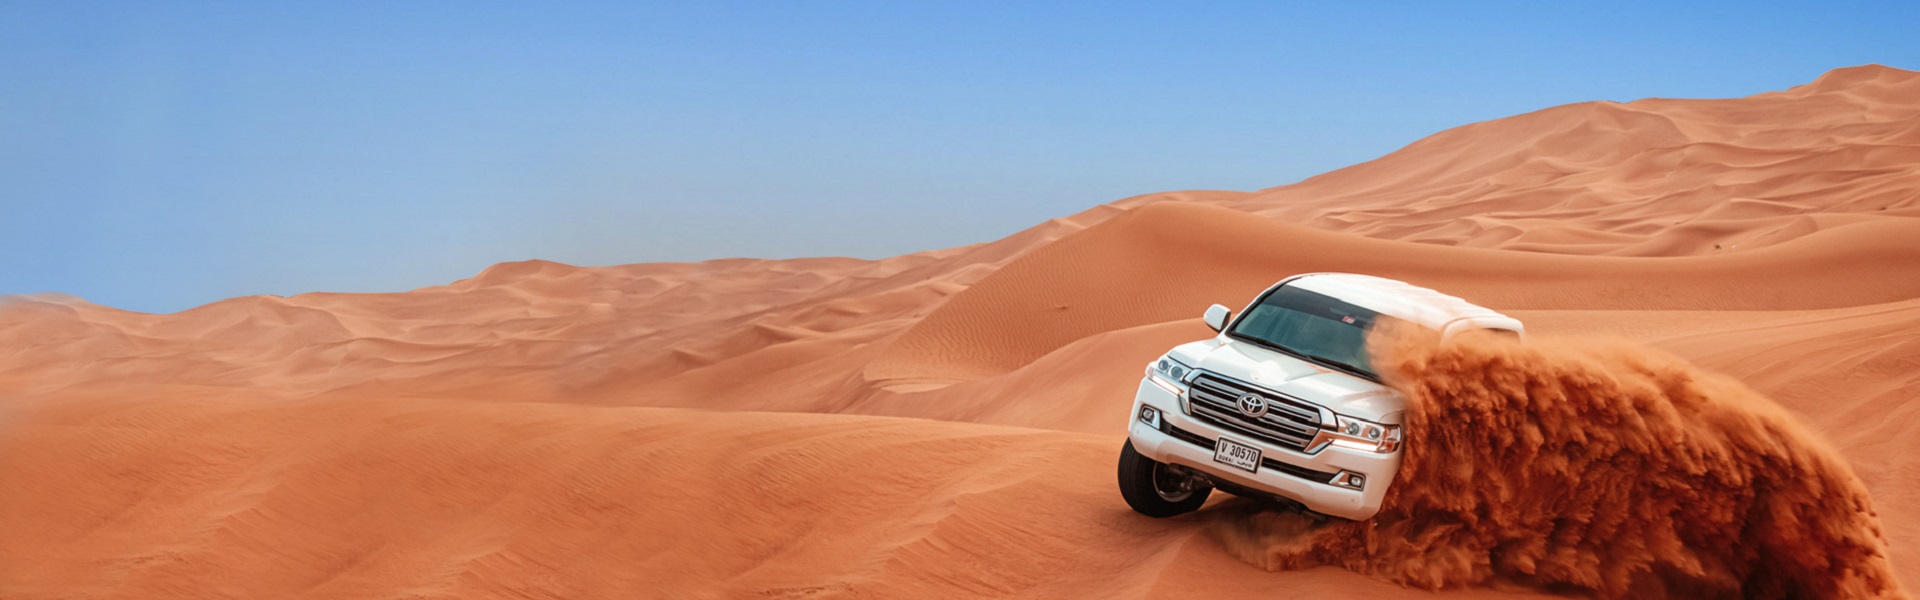 Rent a car Novi Beograd | Desert safari in Dubai